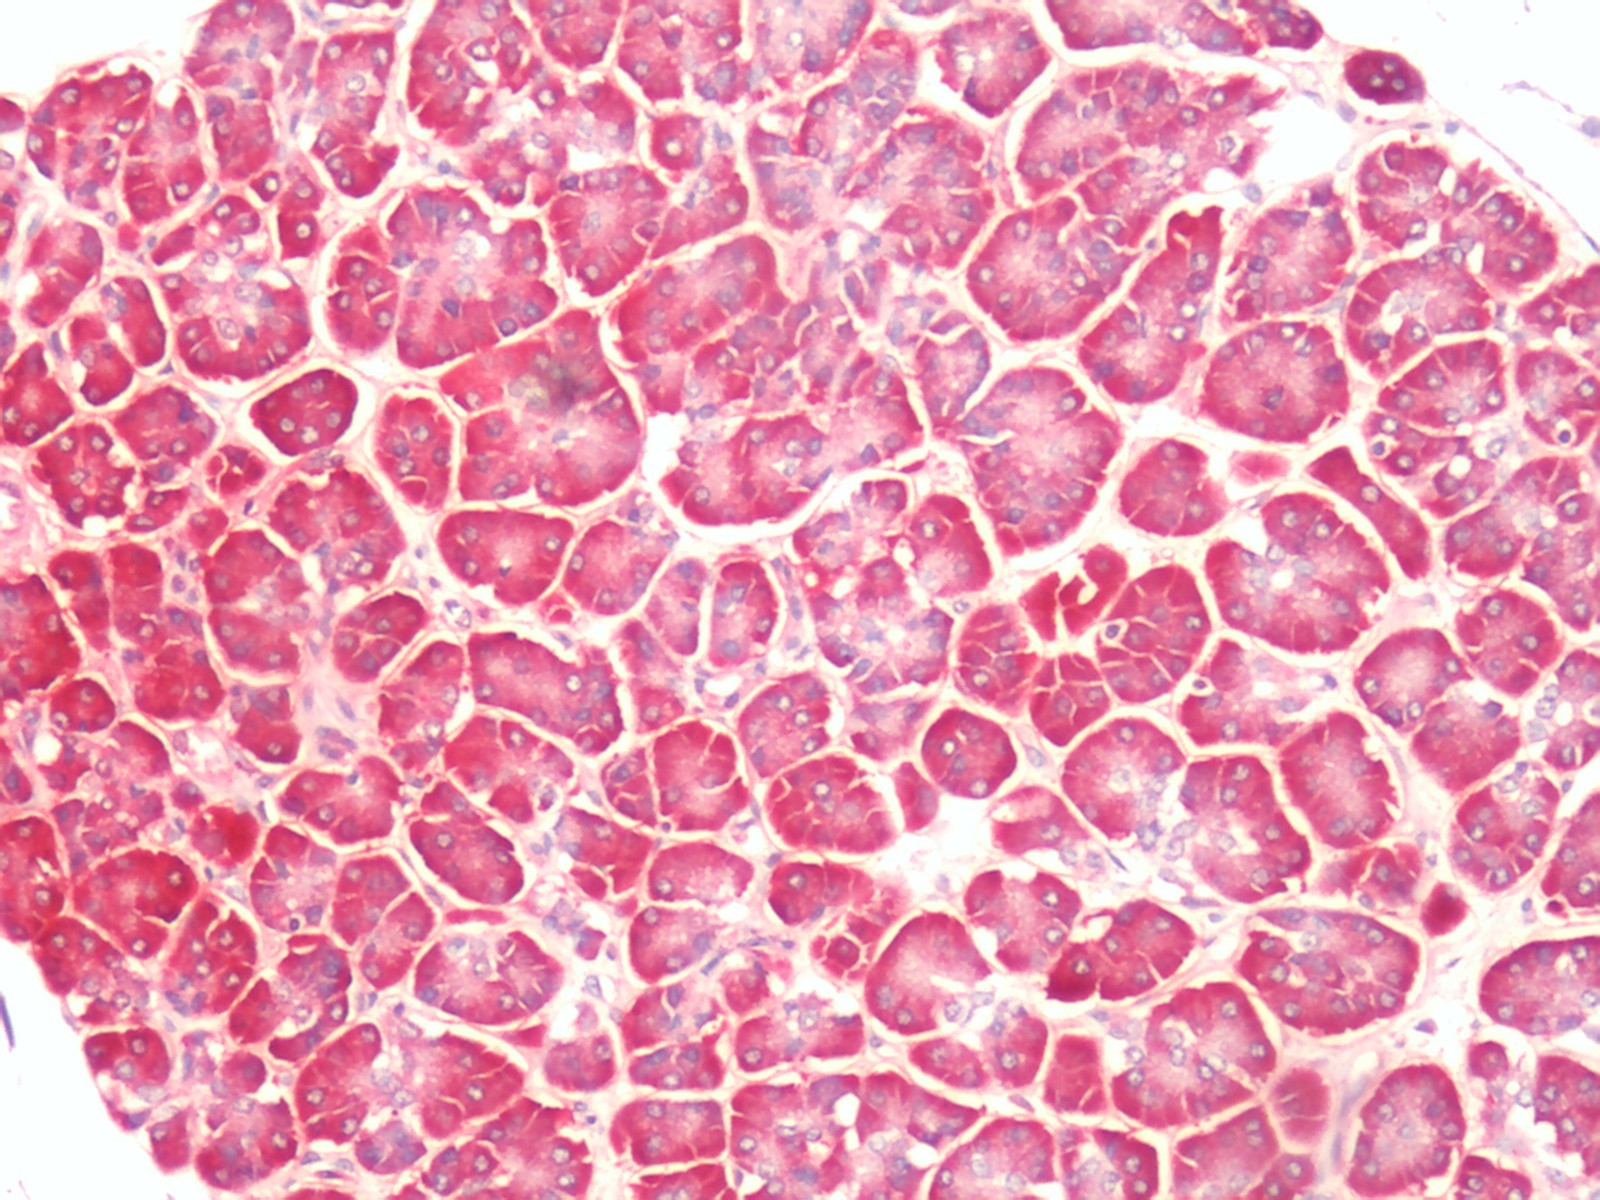 PTGER4 / EP4 Antibody - Human, Pancreas: Formalin-Fixed Paraffin-Embedded (FFPE)